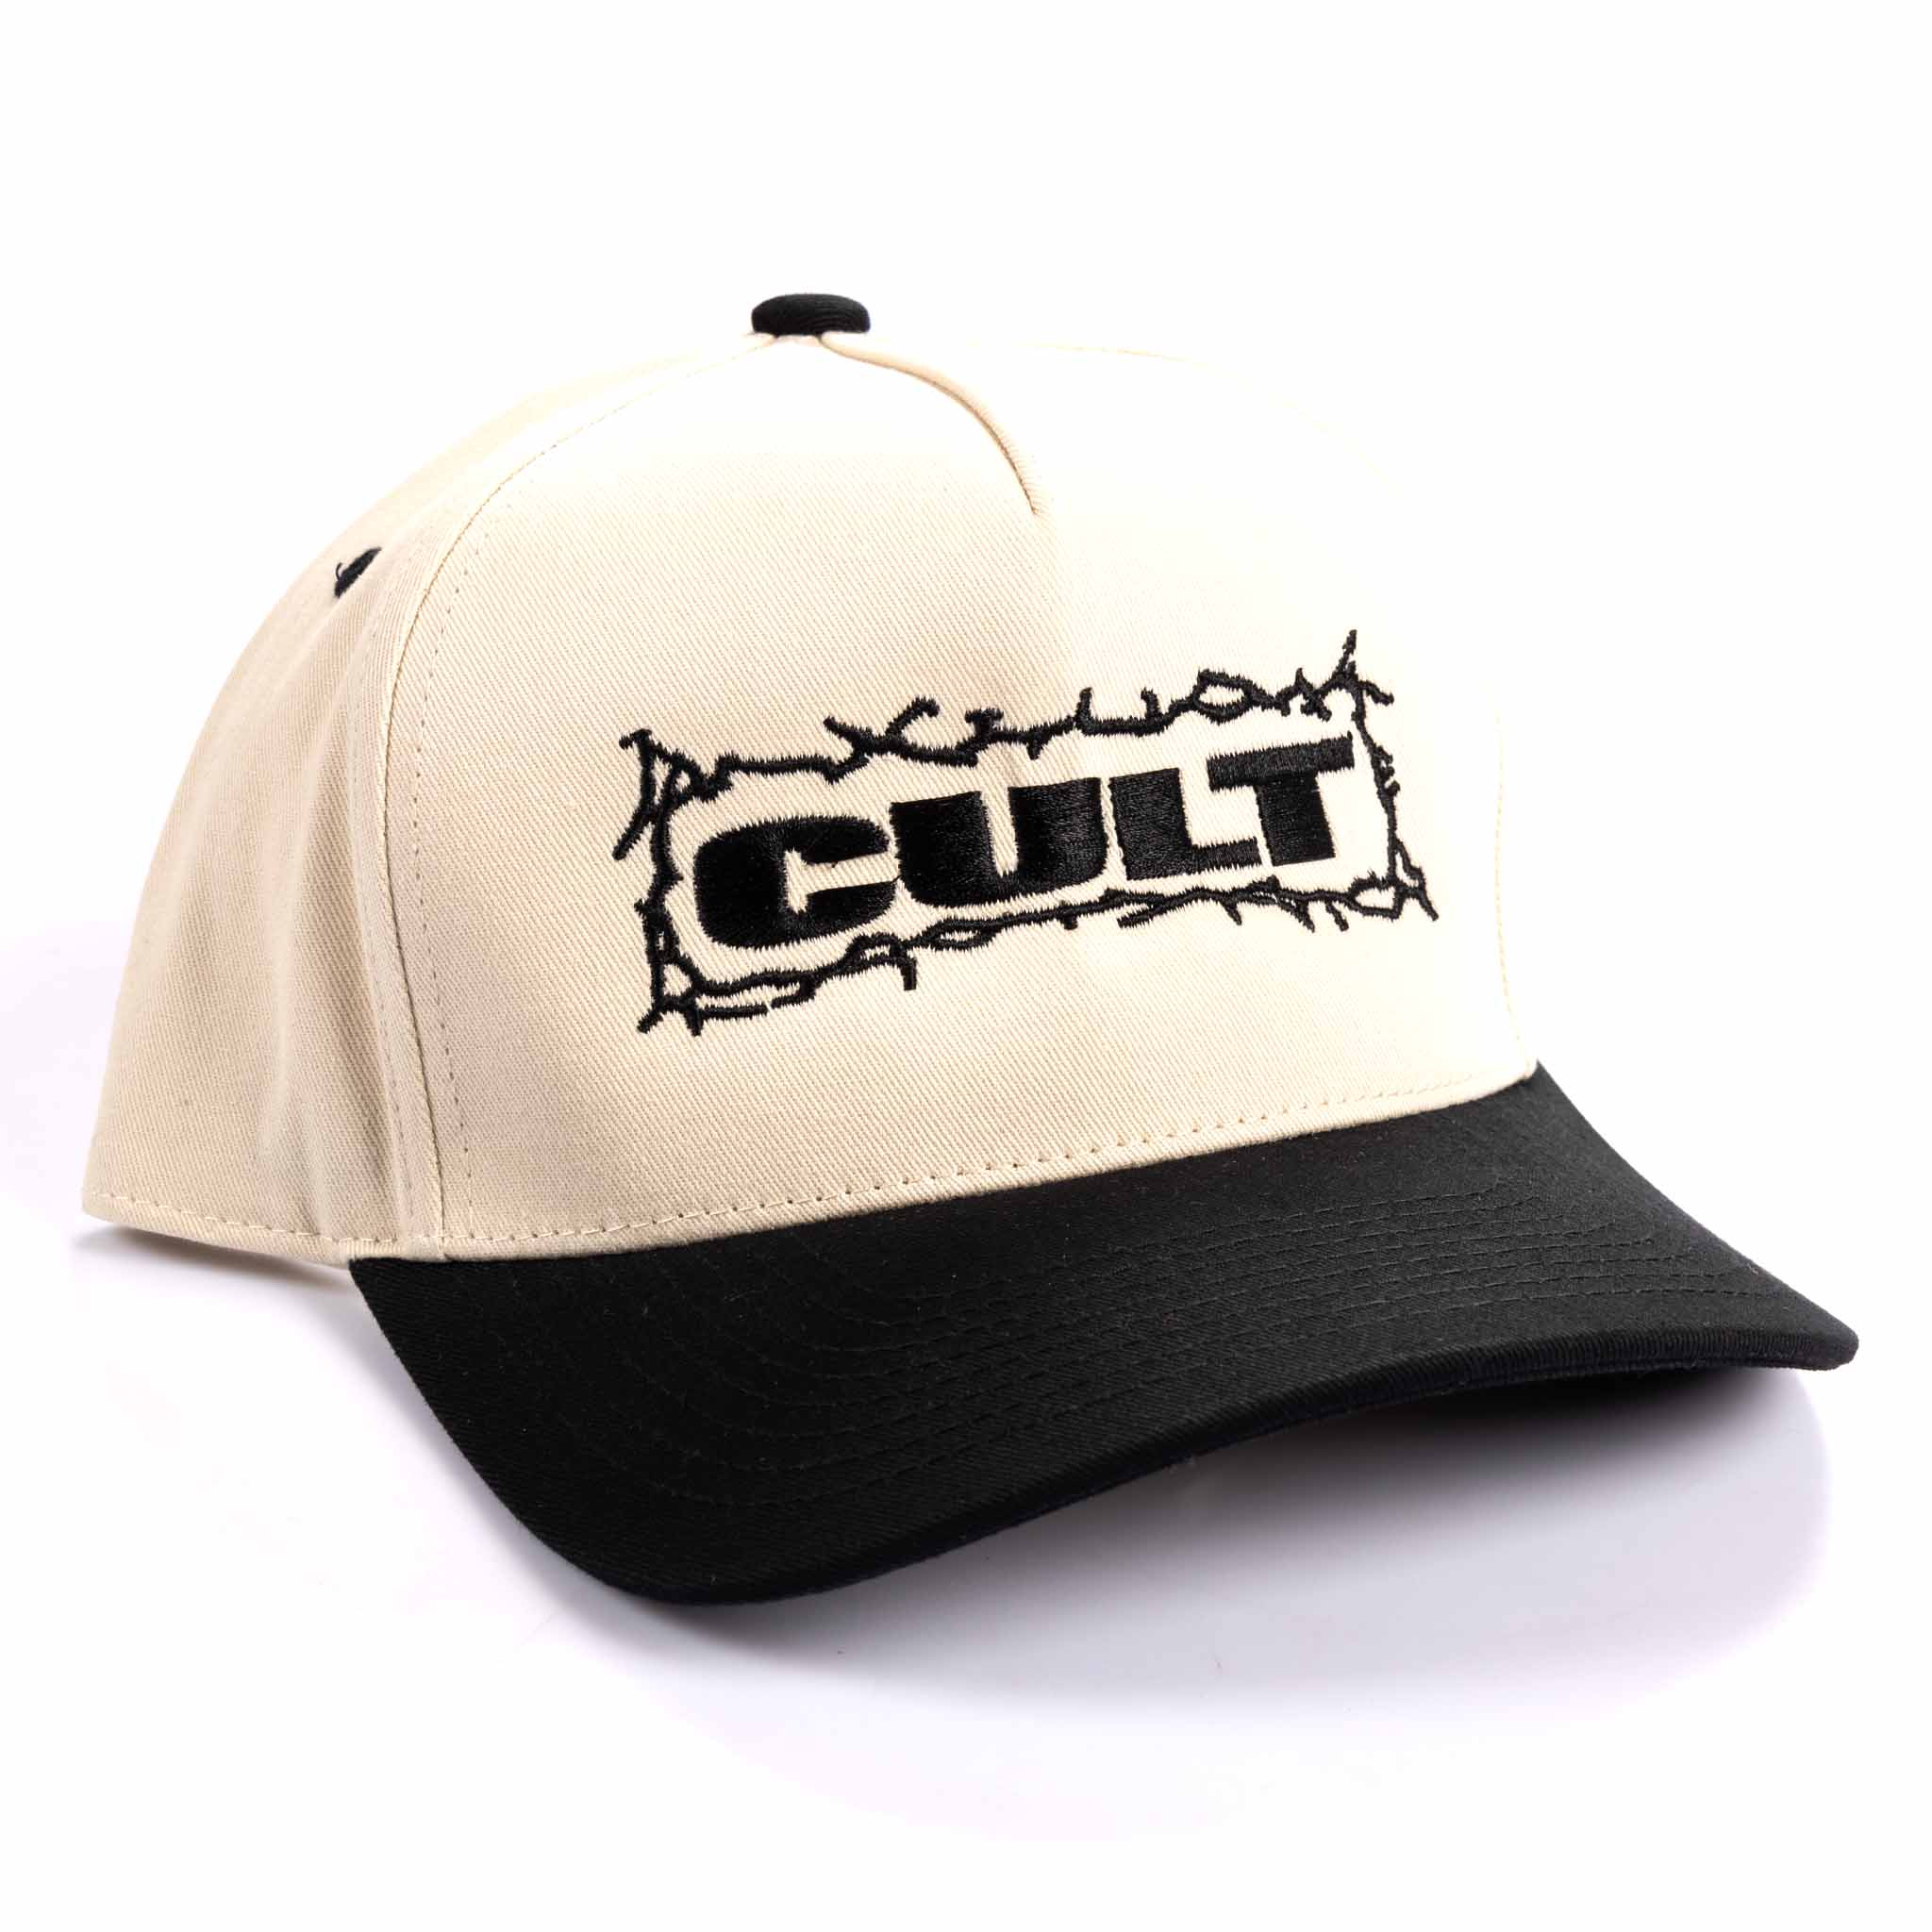 Cult Bolts Cap - Cream / Black | Backyard UK BMX Shop